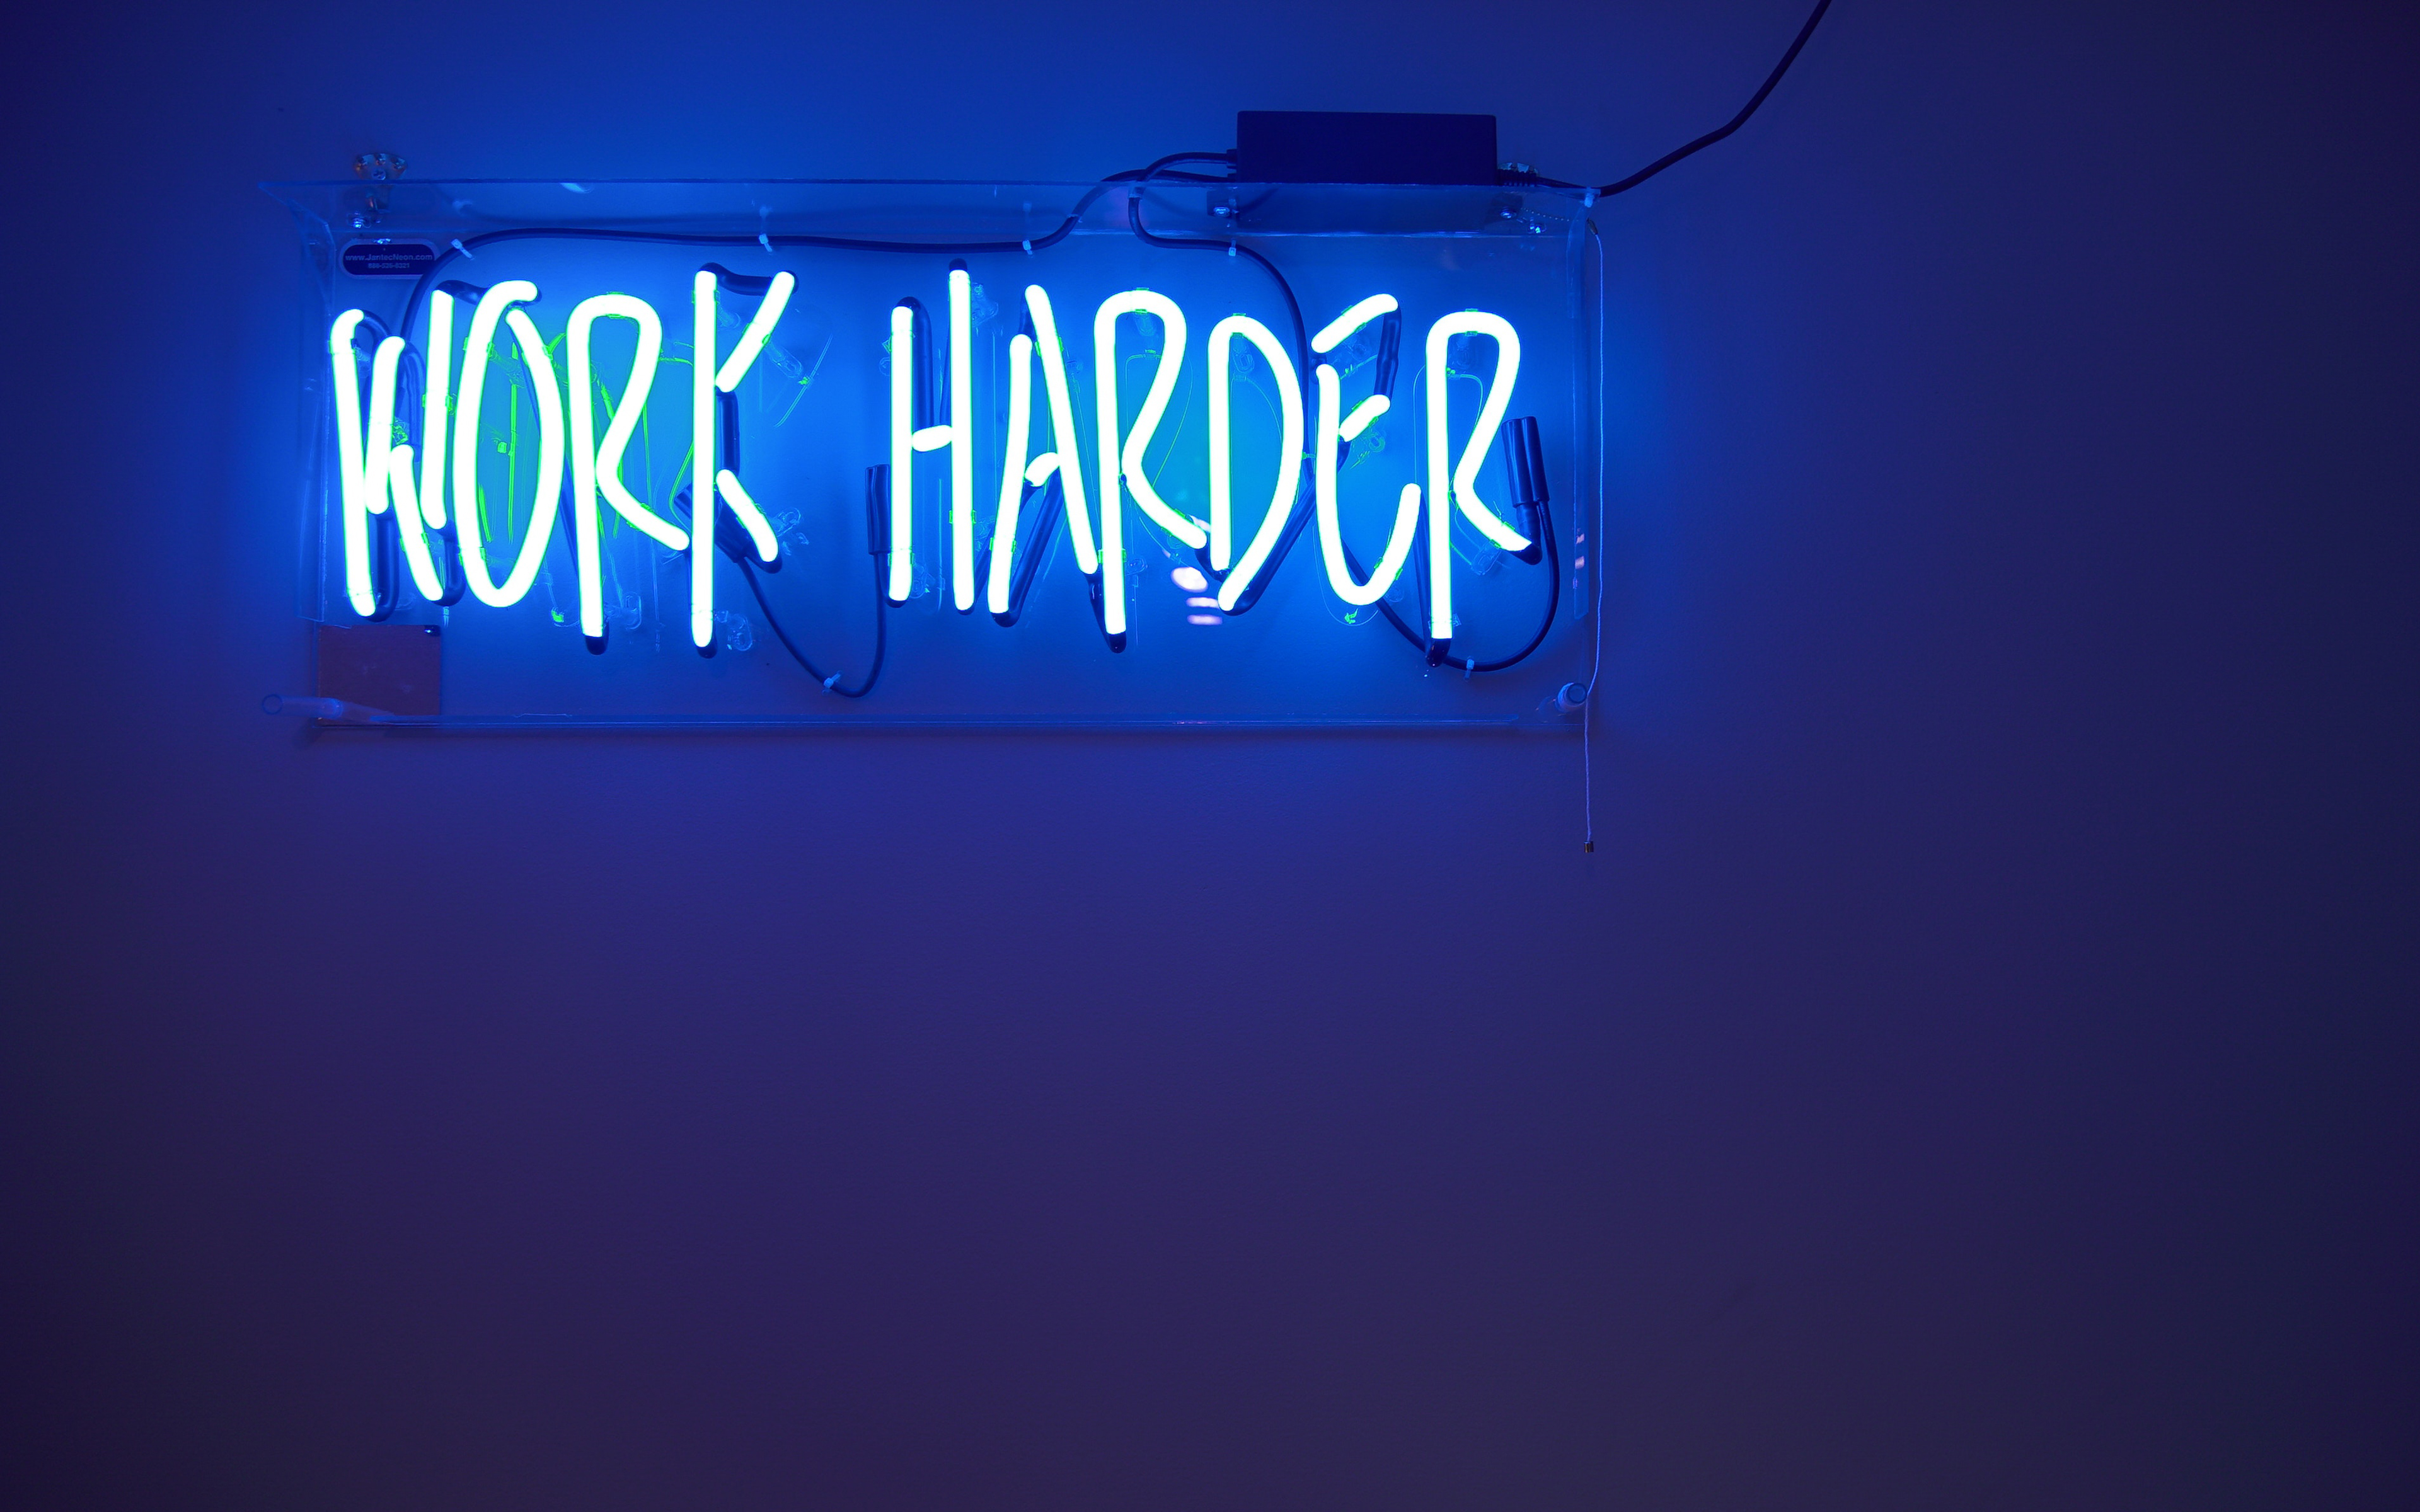 Work Harder Neon Sign 4K Wallpapers